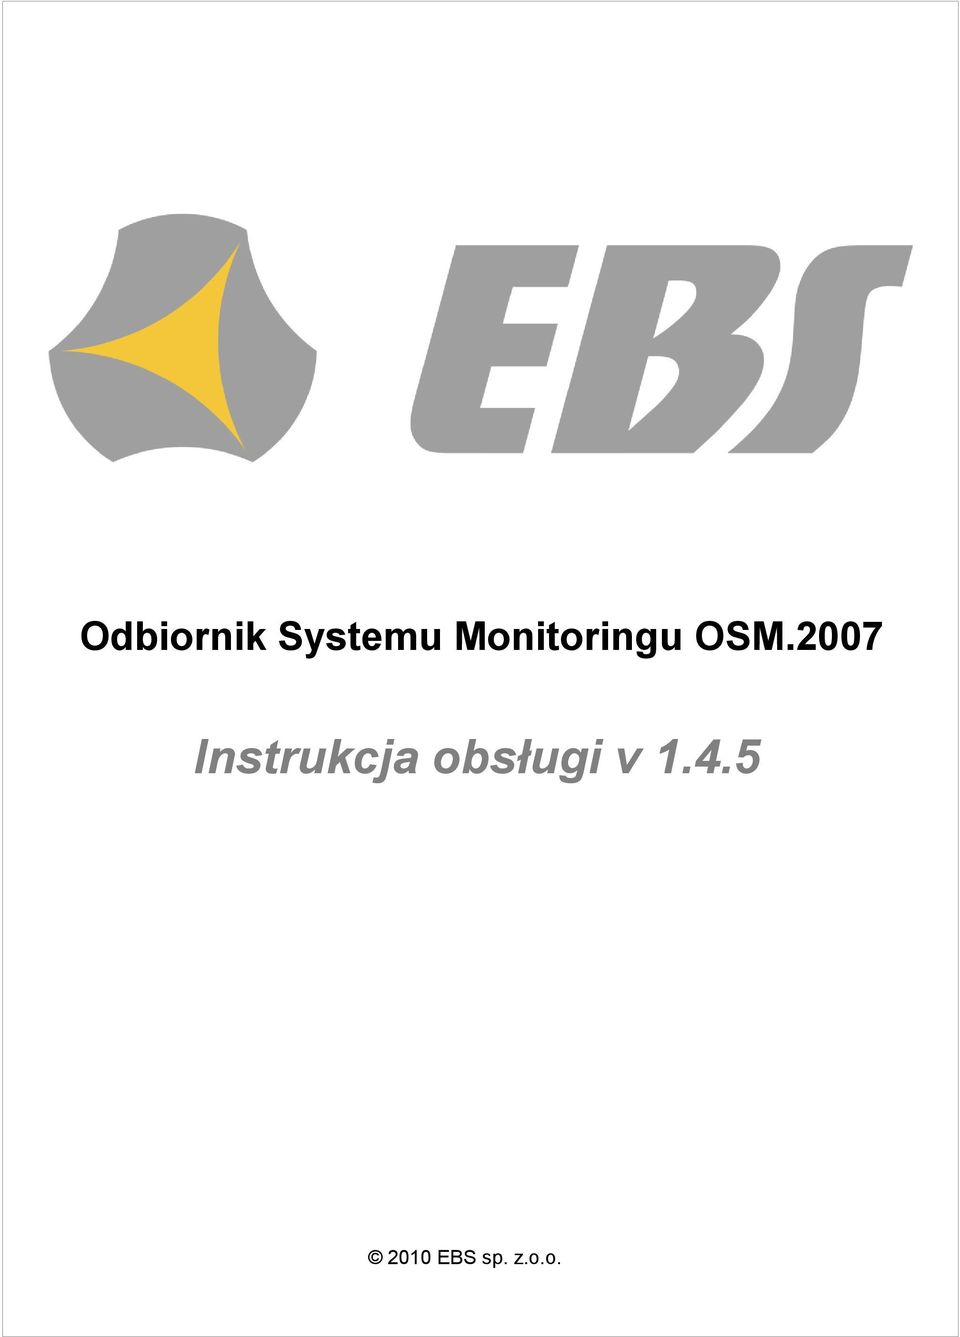 Monitoringu OSM.